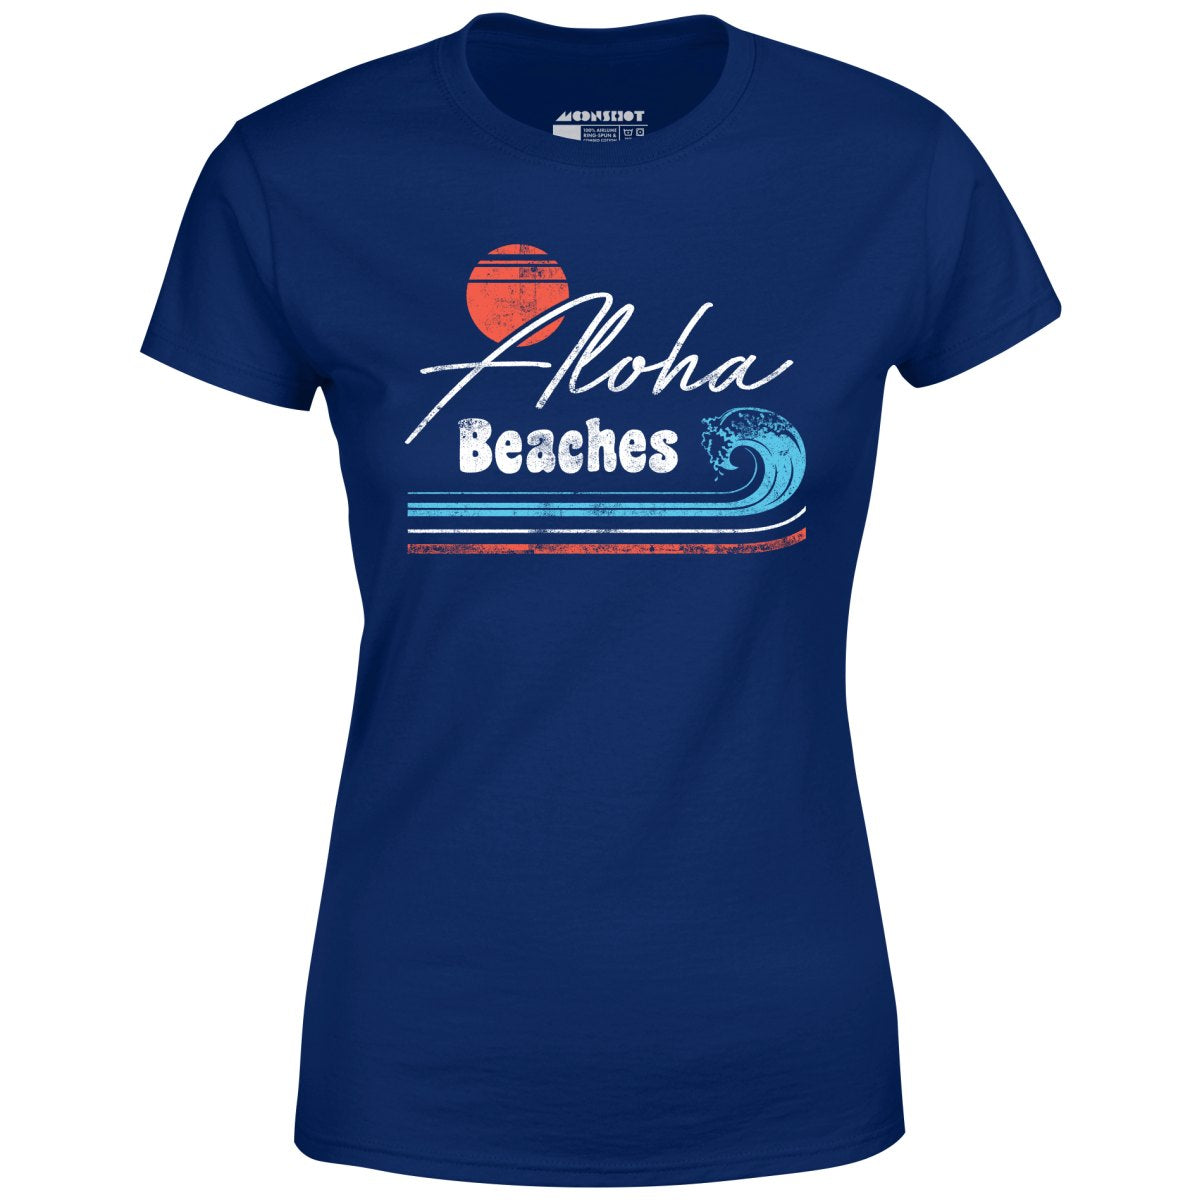 Aloha Beaches - Women's T-Shirt